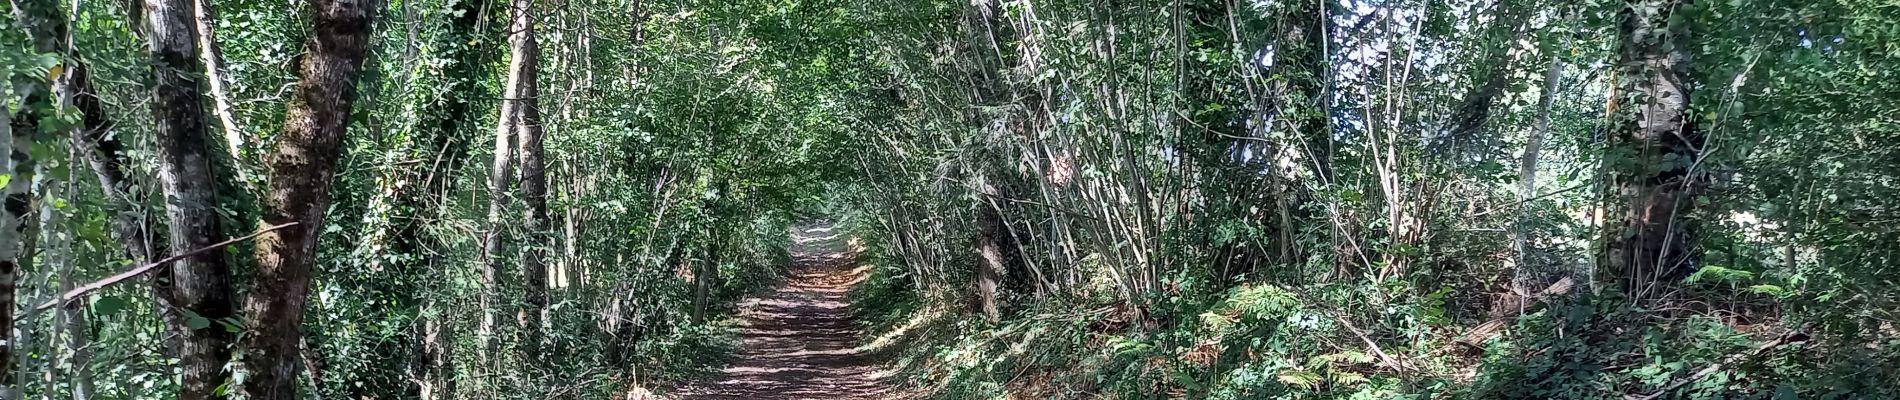 Trail Walking Moutier-Malcard - Moutier 11.7km le 20/08/2020 - Photo